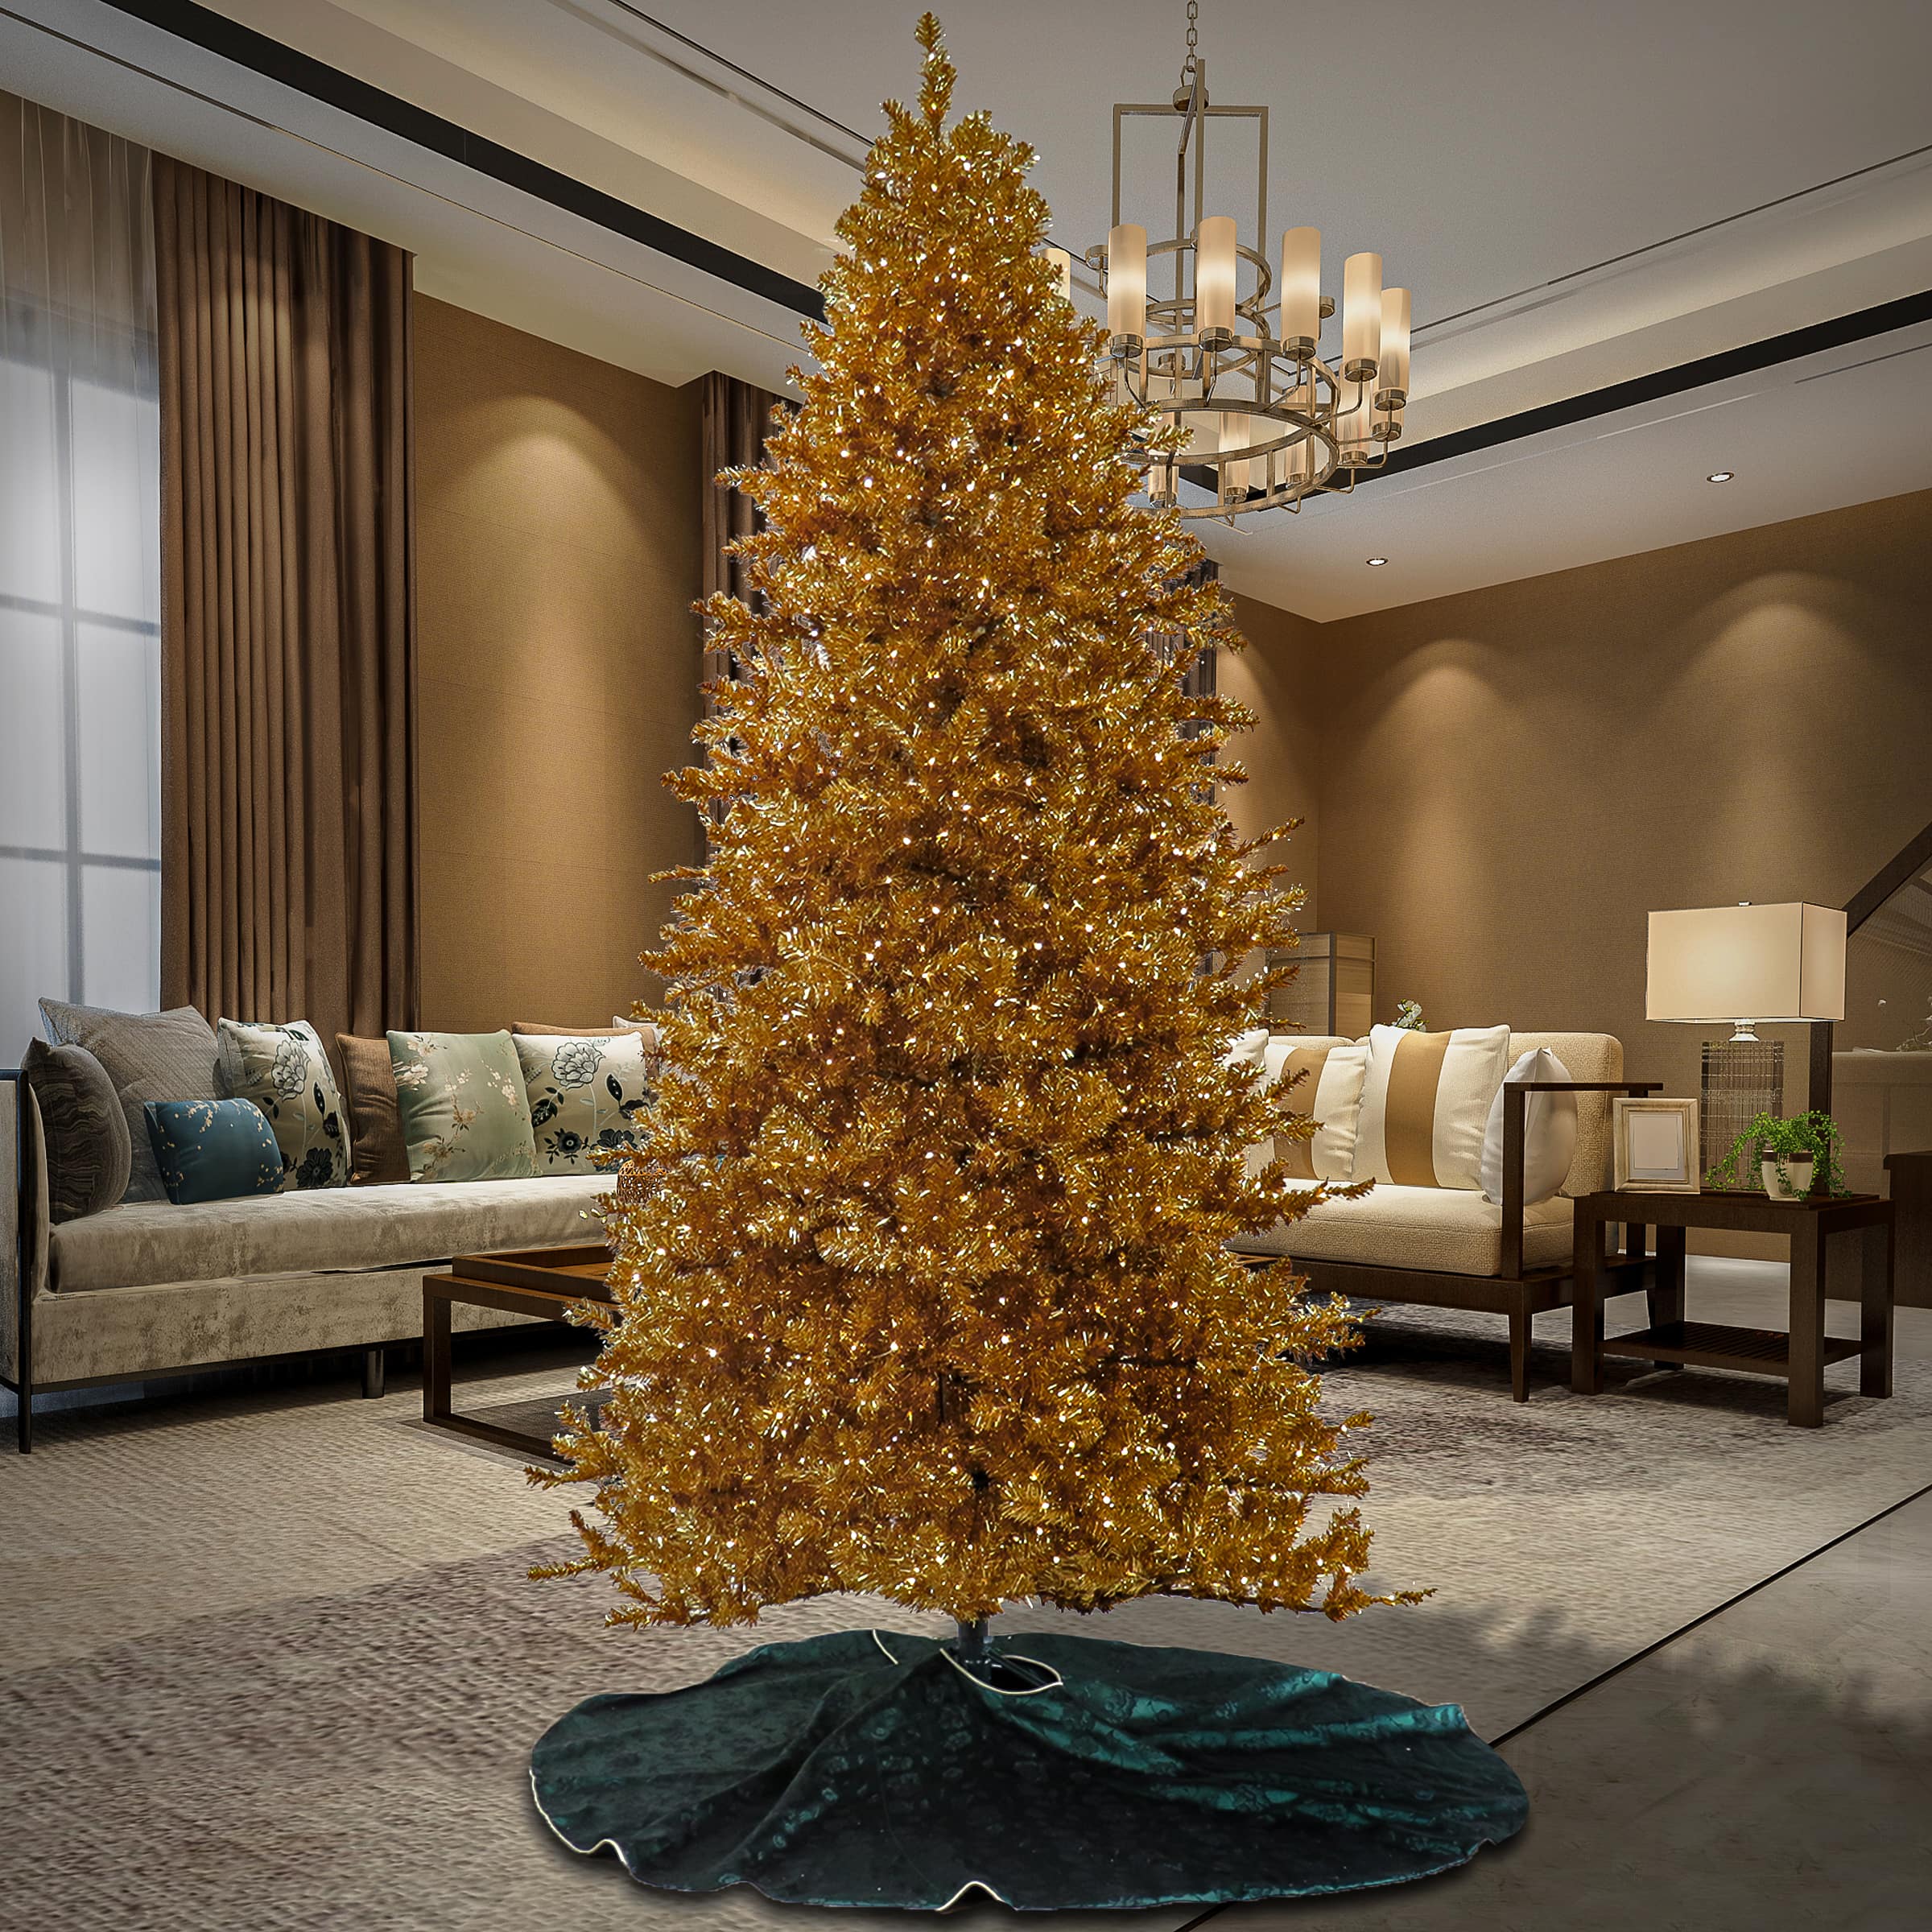 9ft. Pre-Lit True Gold Metallic Artificial Christmas Tree, White LED Lights